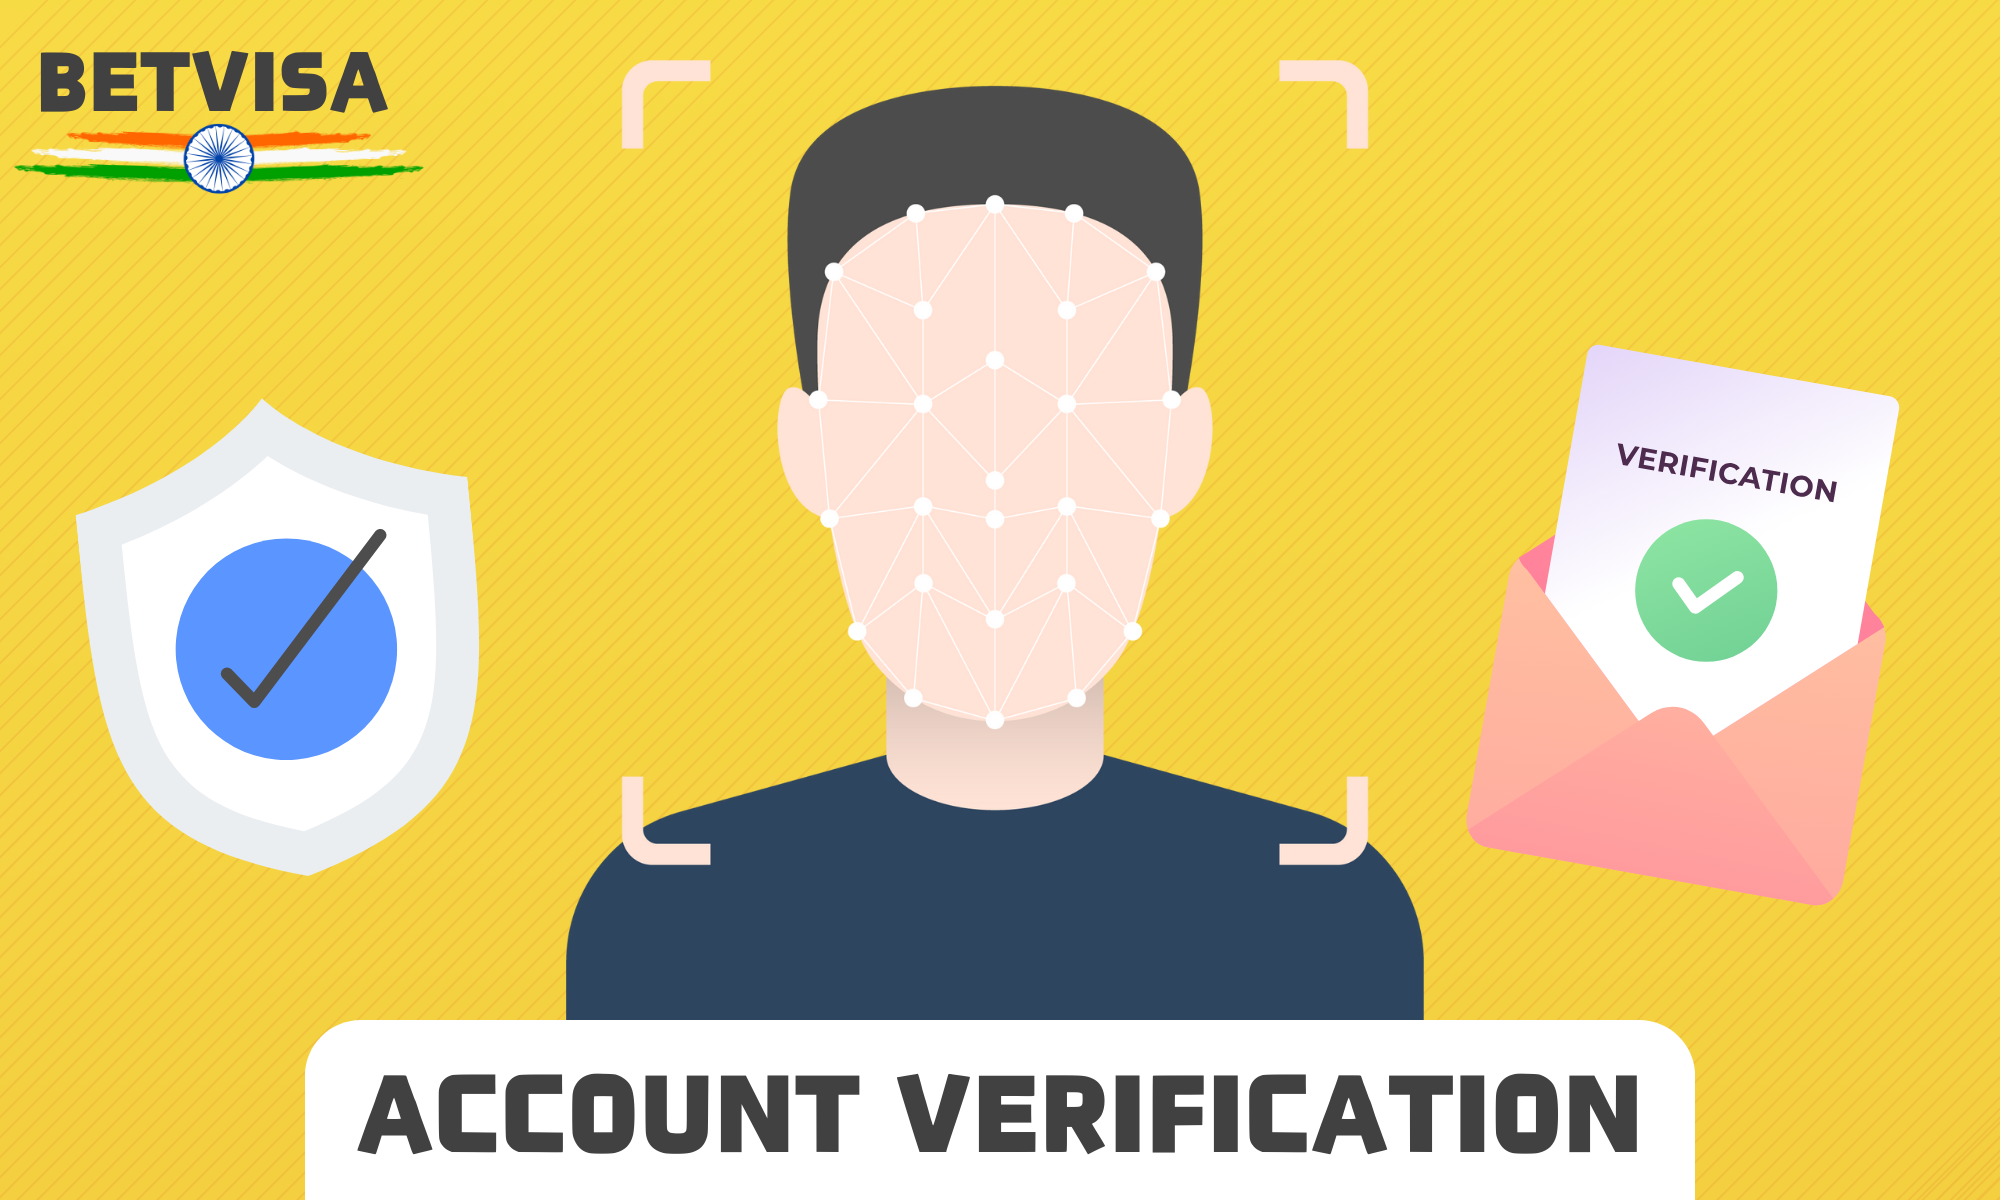 Betvisa user account verification process